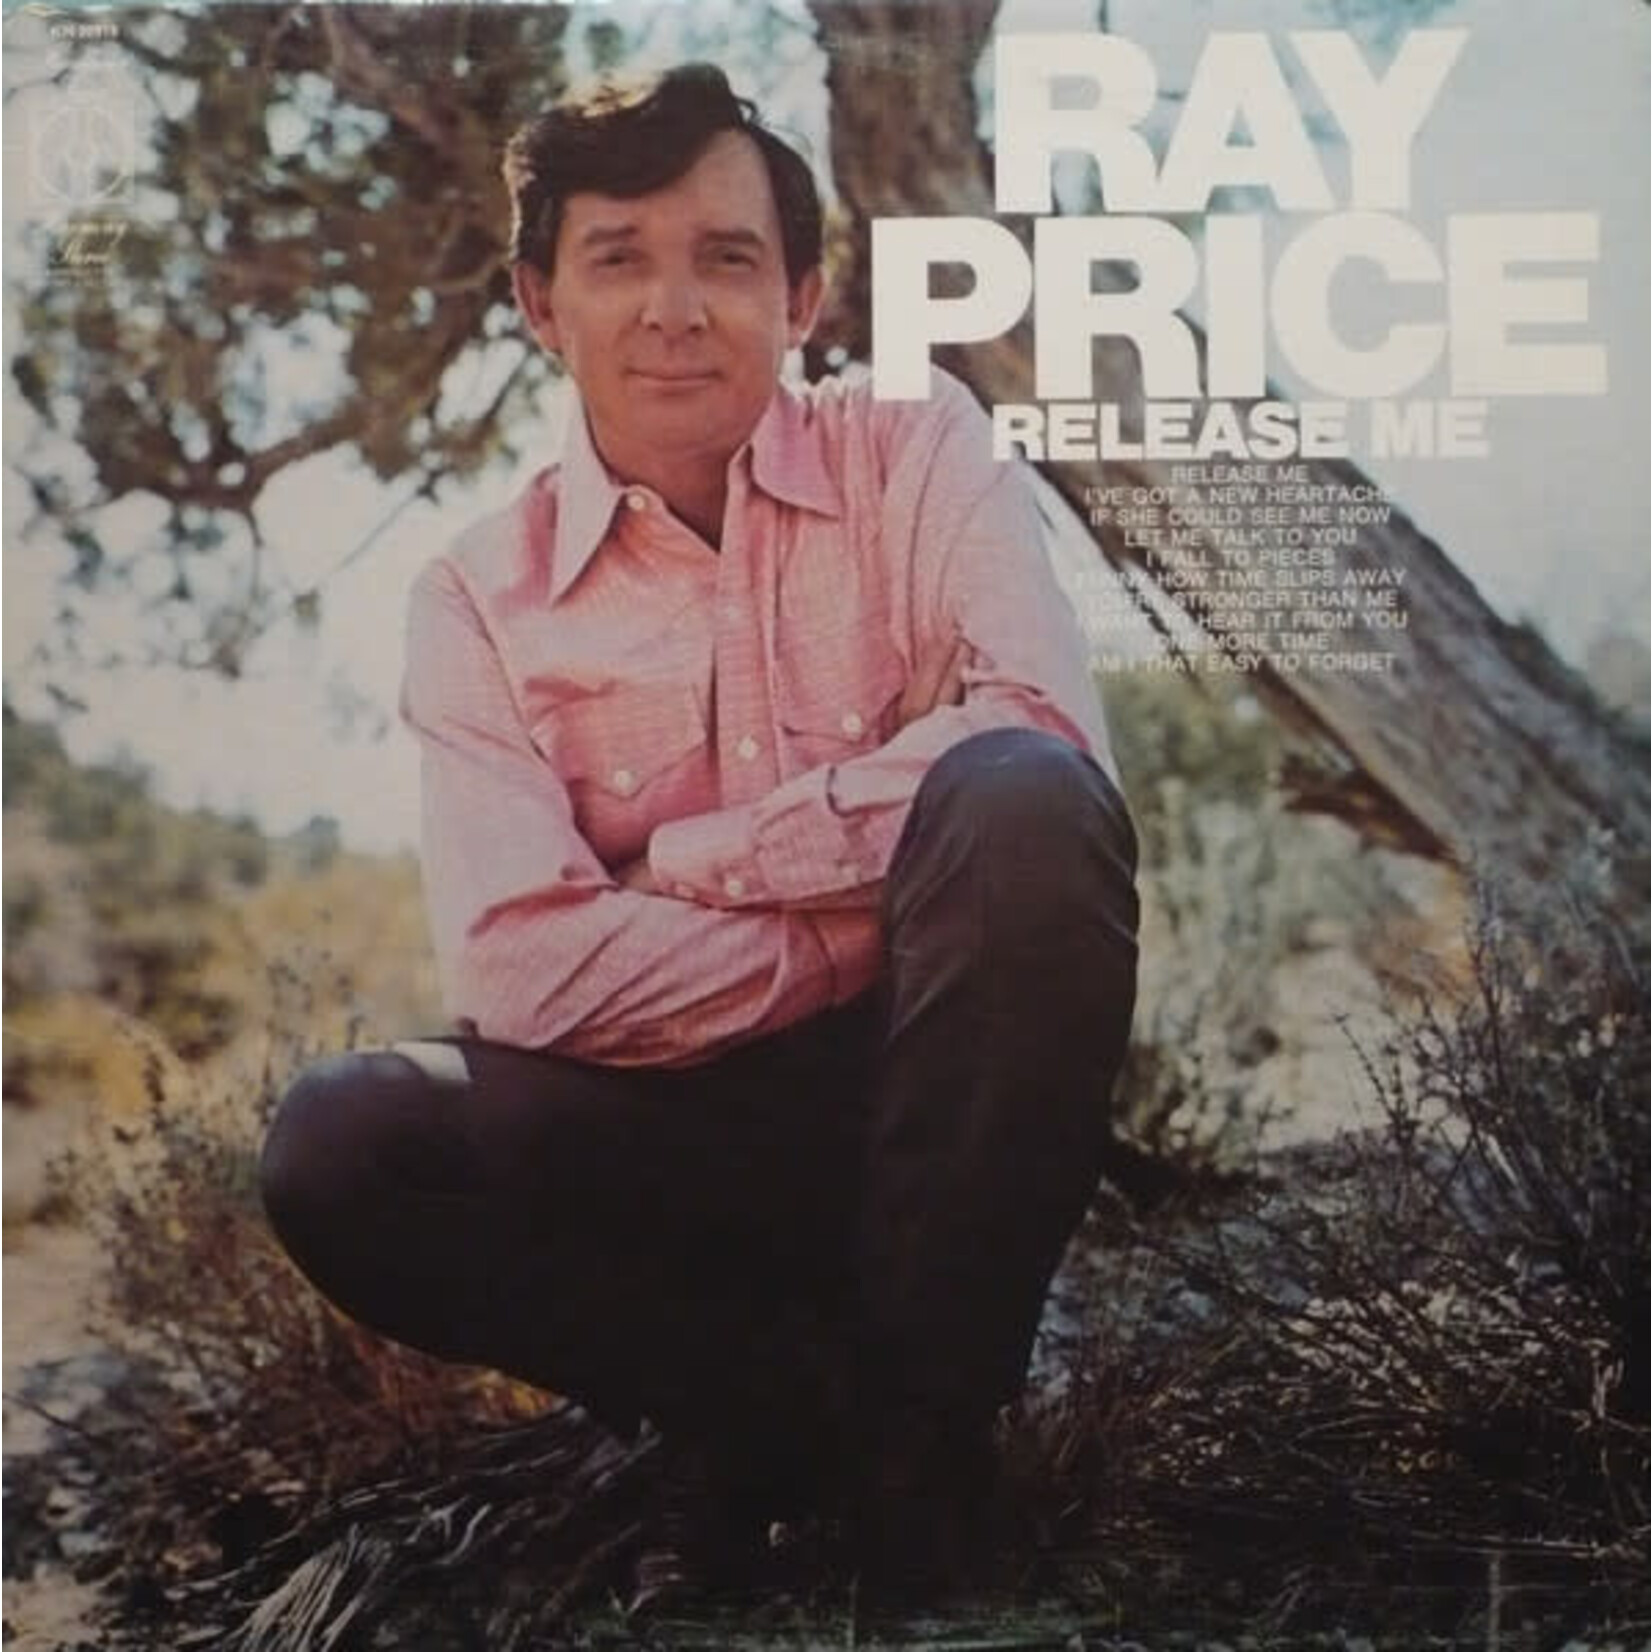 Ray Price Ray Price – Release Me (VG, LP, Harmony – KH 30919)